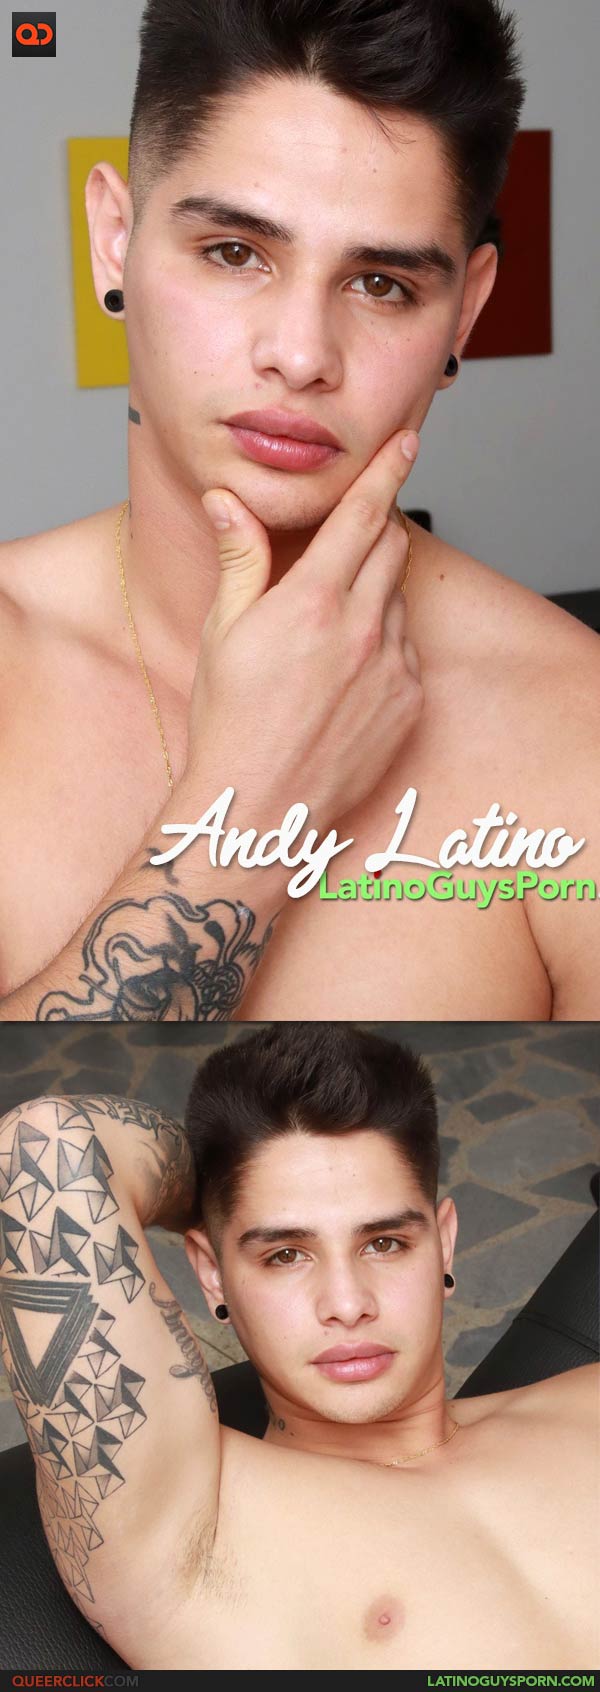 Latino Guys Porn: Andy Latino 